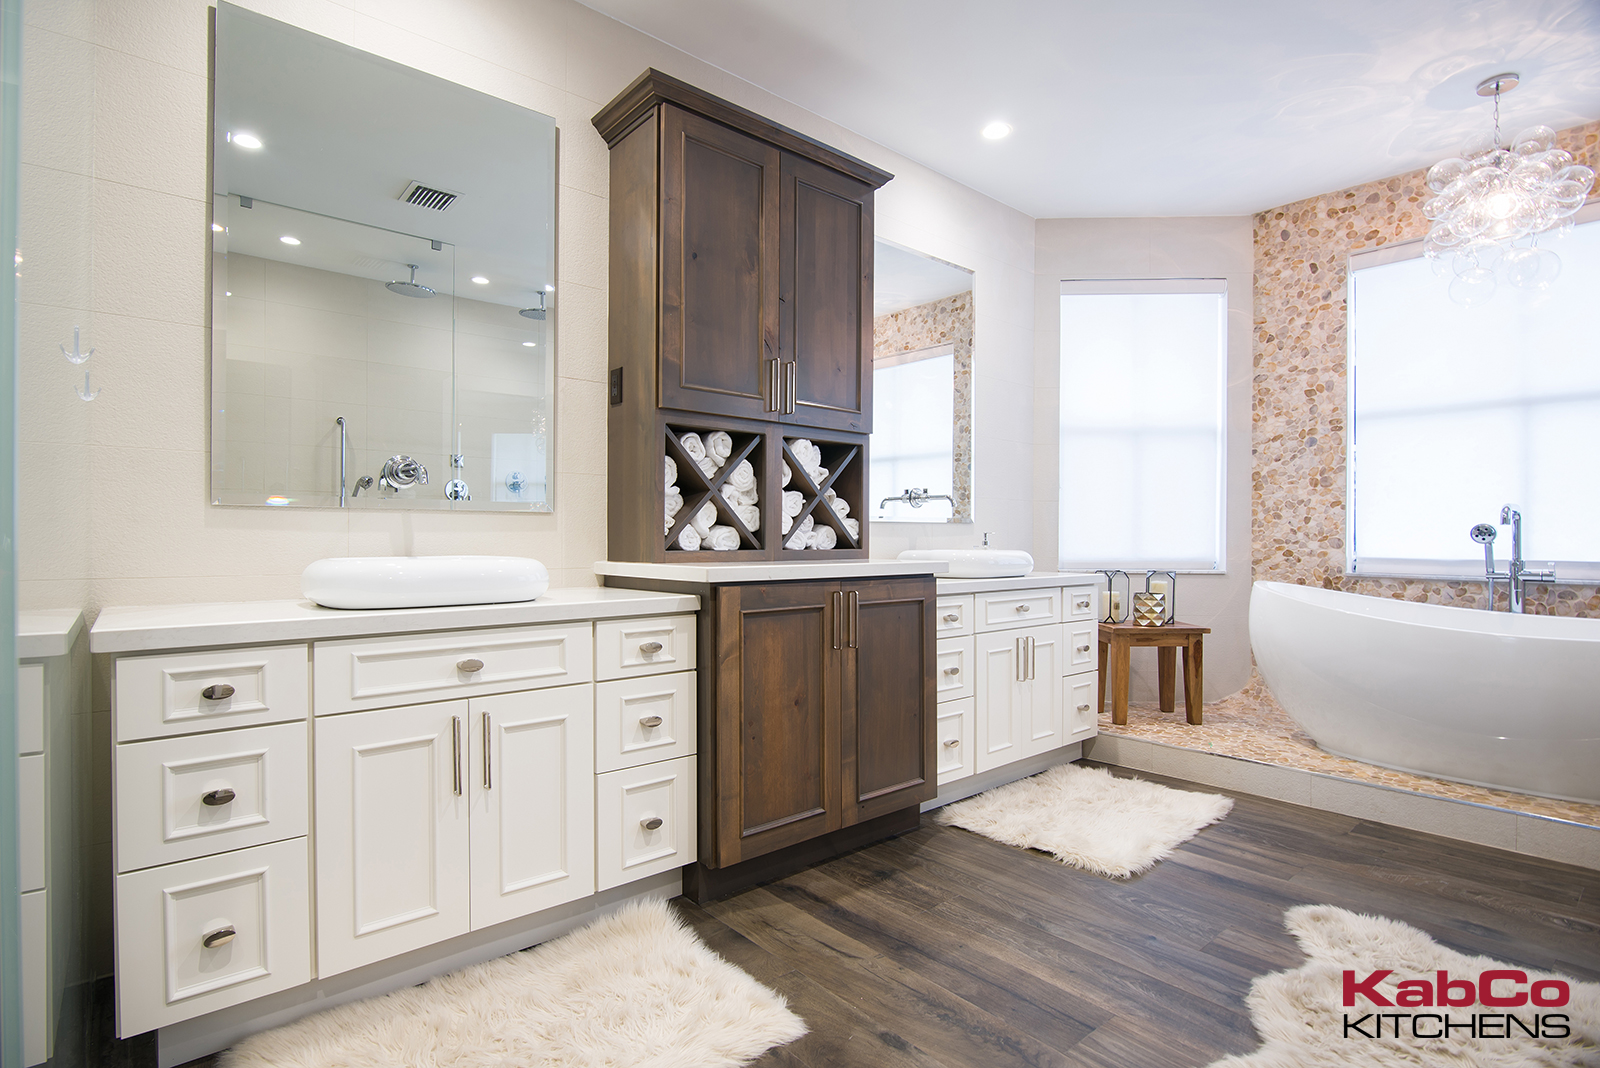 Pembroke Pines Bathroom Remodel Inspiration Featuring Showplace